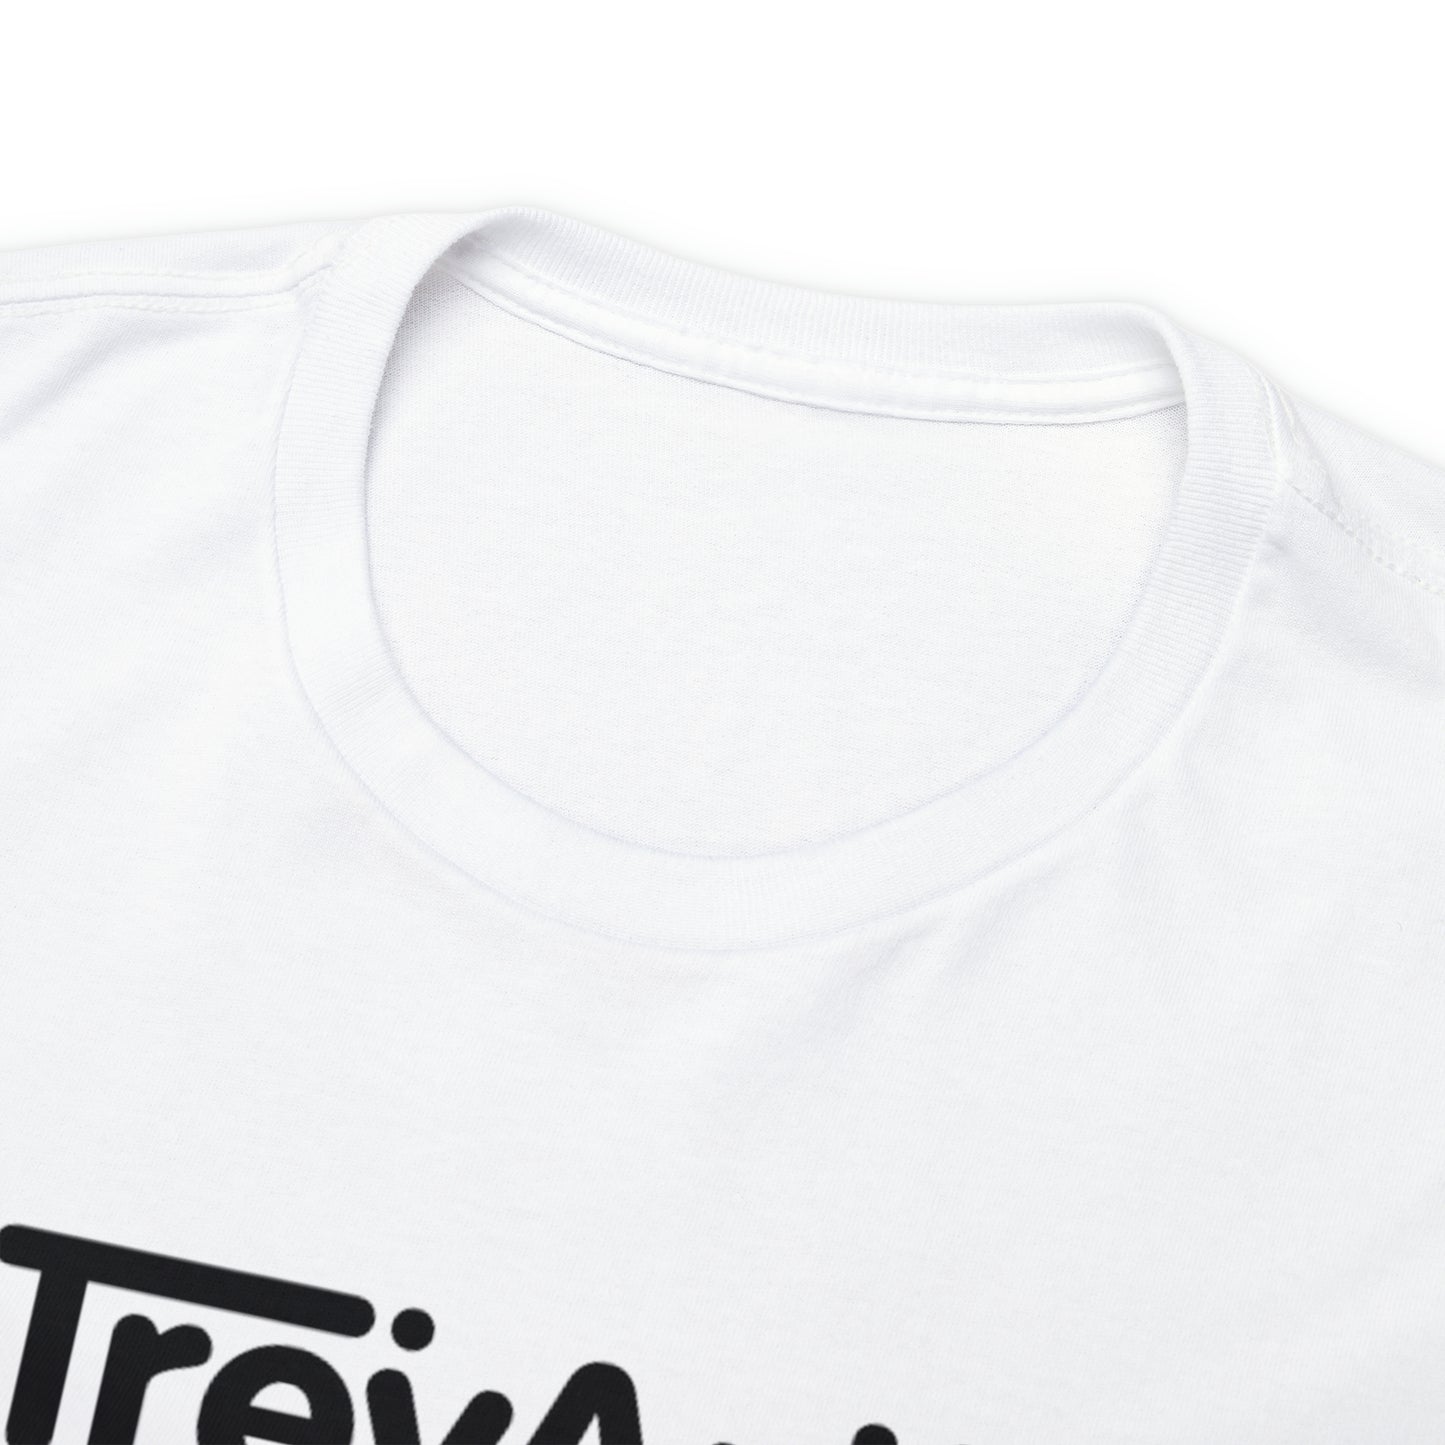 TreyArtKey Logo Shirt